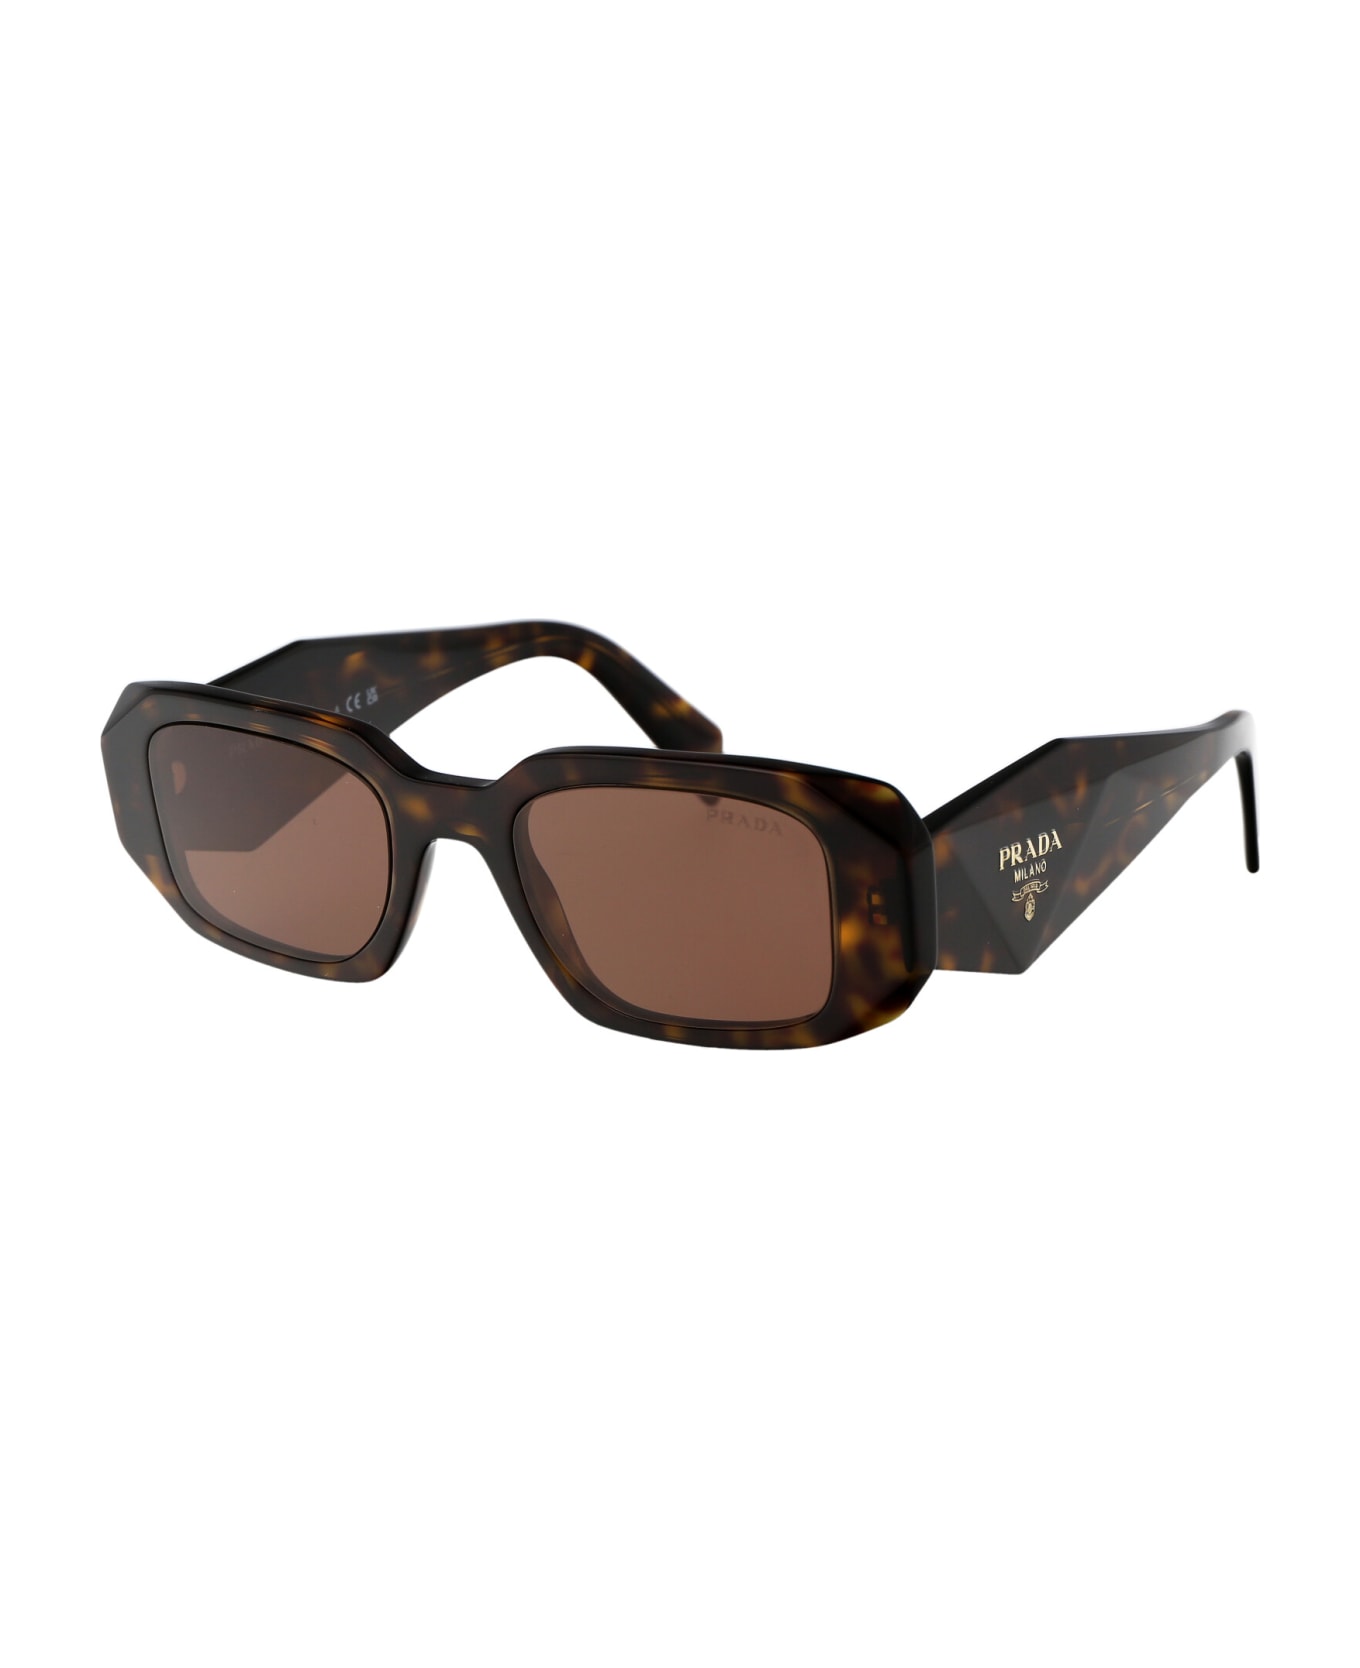 Prada Eyewear 0pr 17ws Sunglasses - 2AU03U Tortoise